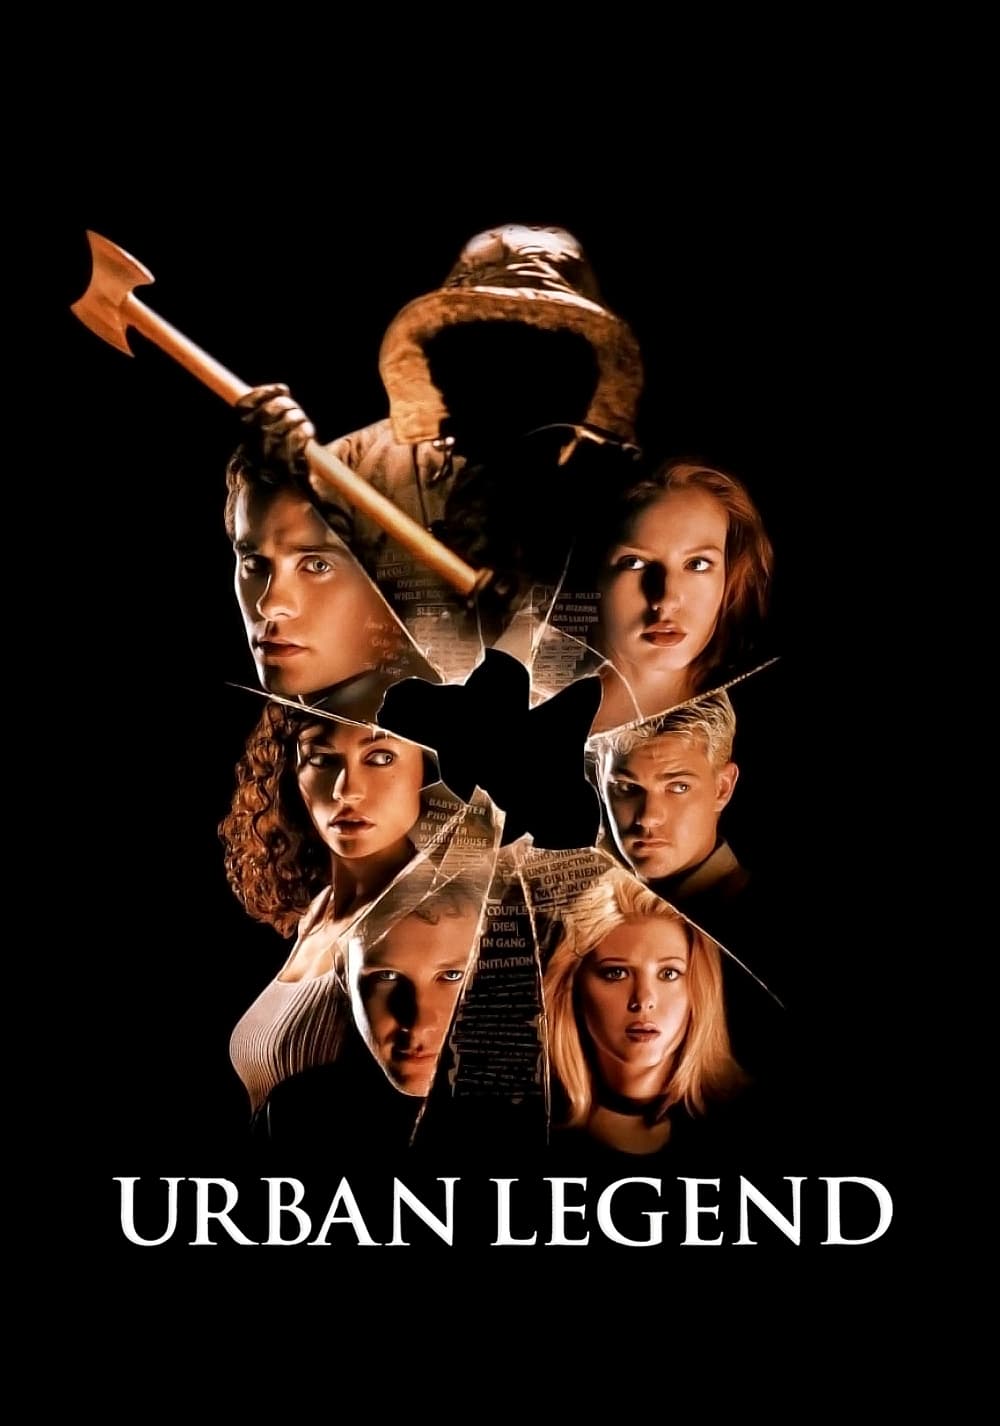 Leyenda urbana (1998)